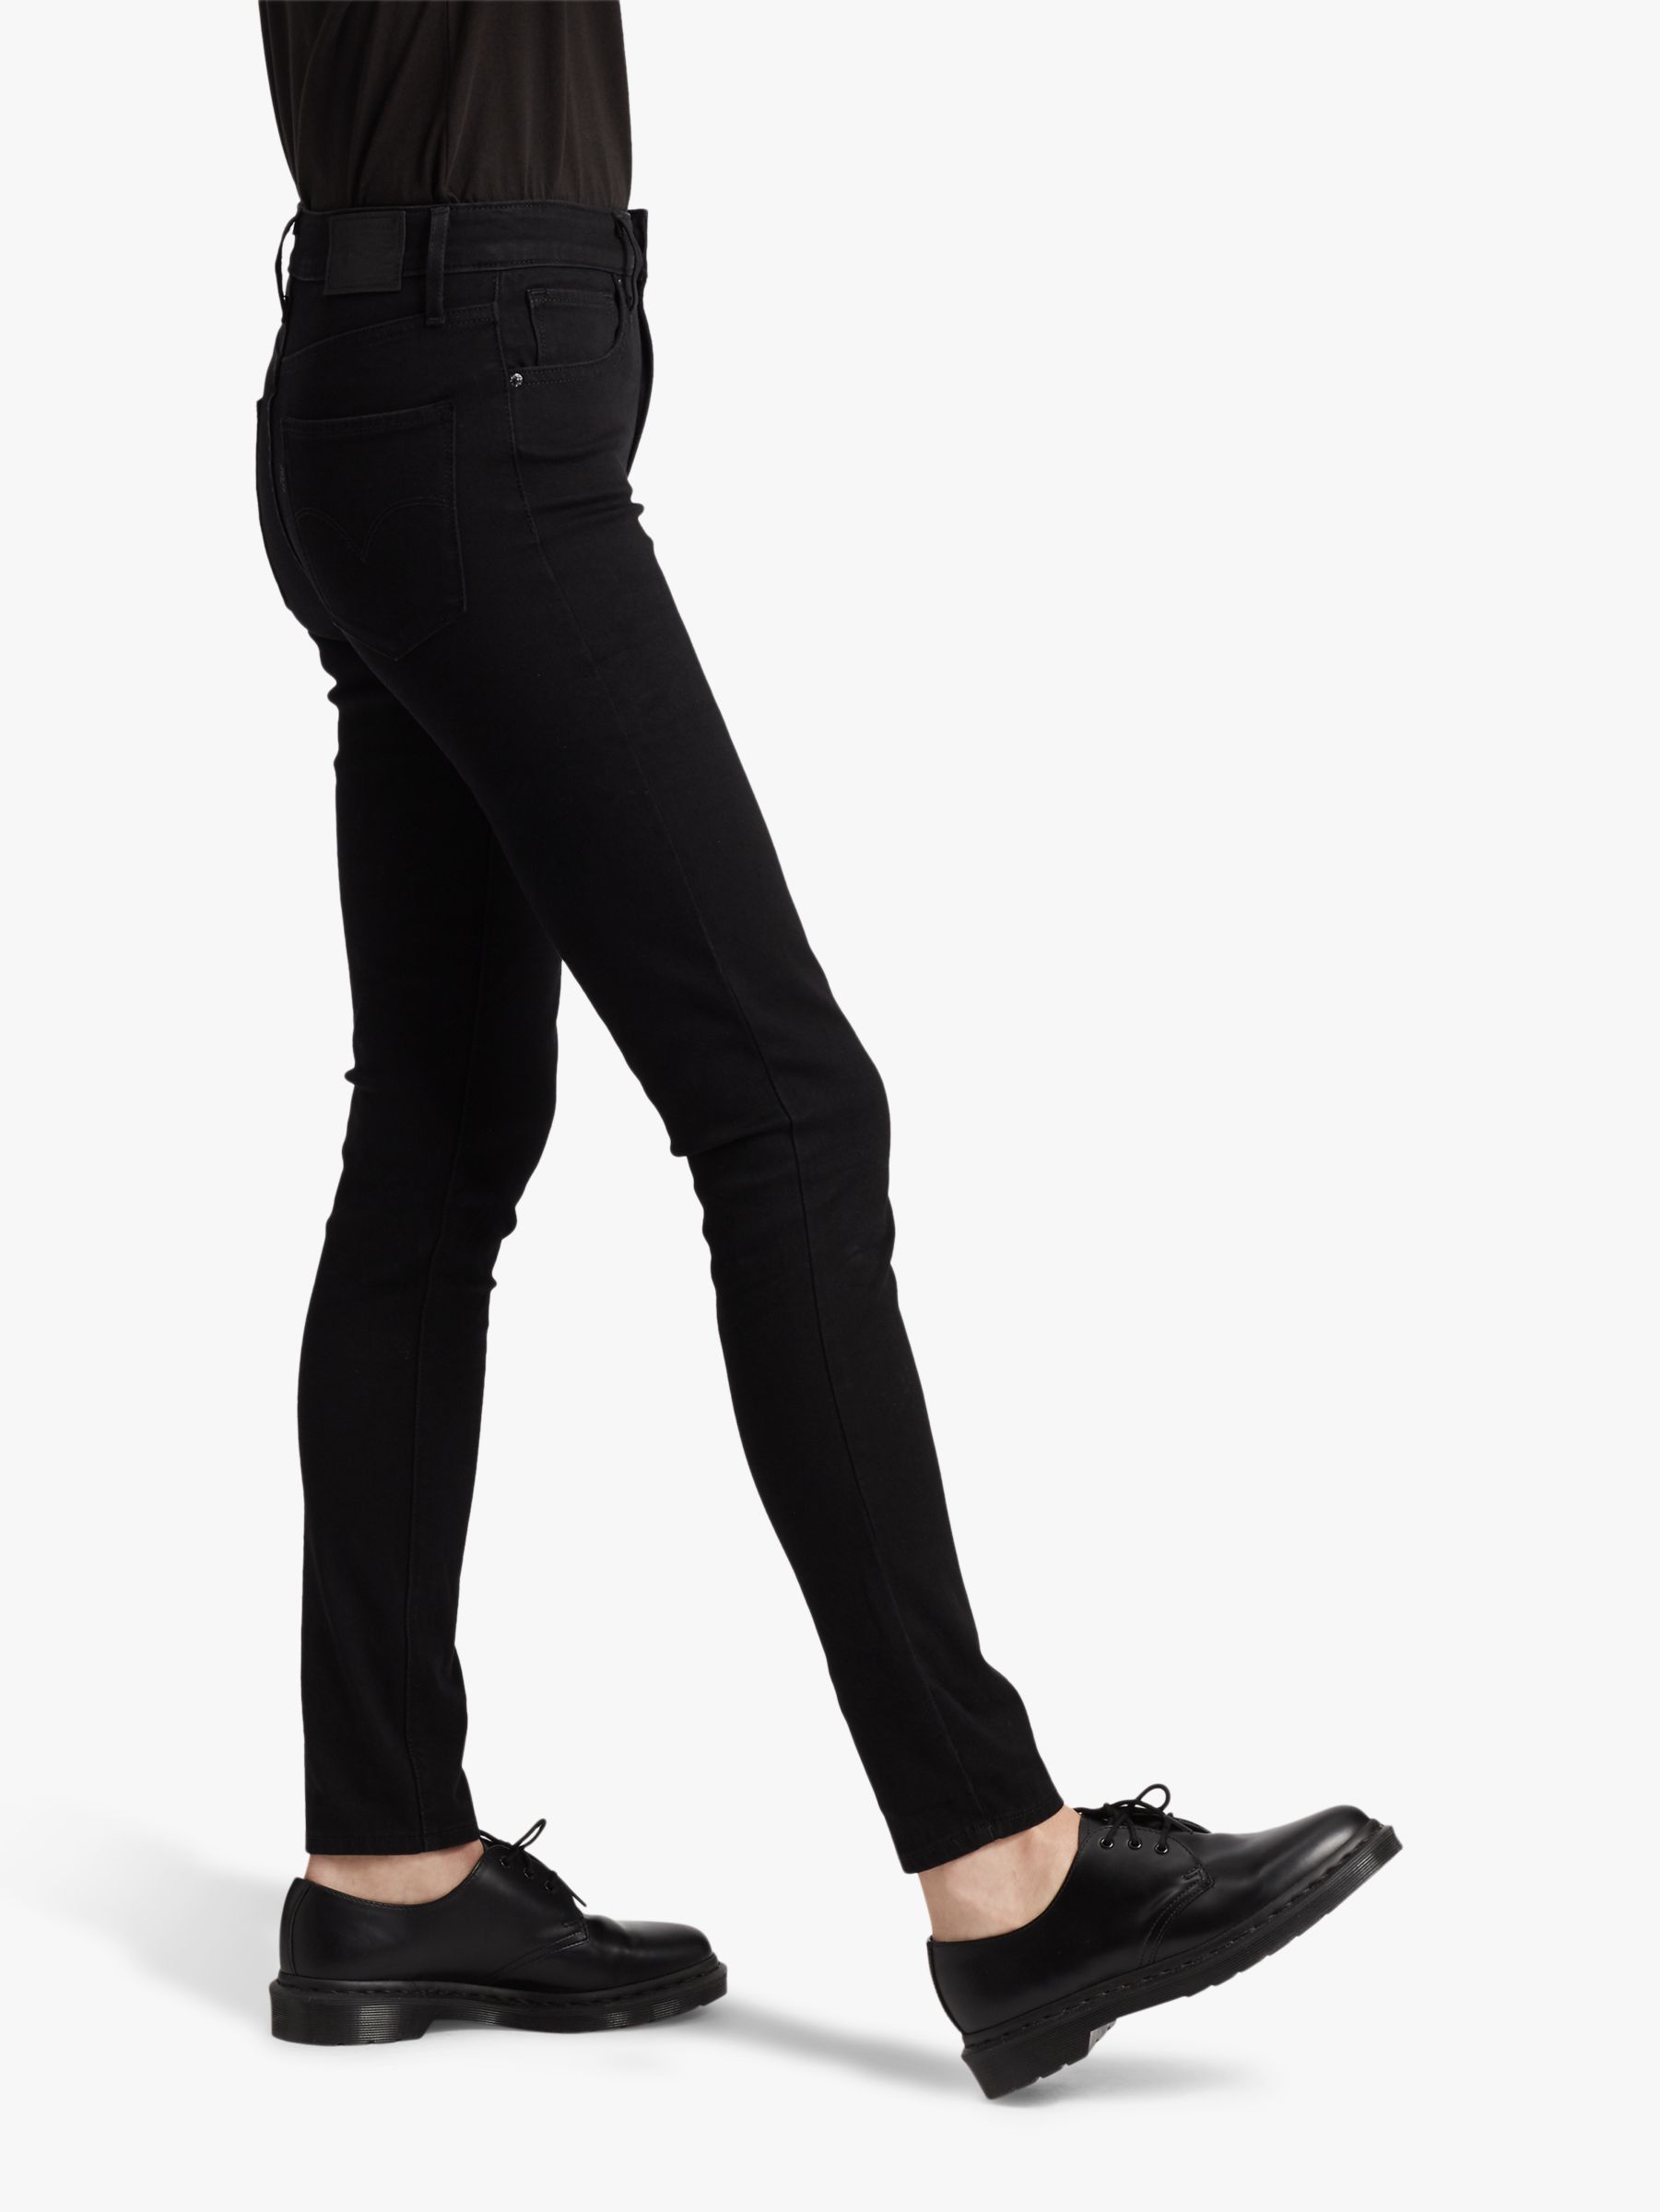 Levi's 721 High Rise Skinny Jeans, Black at John Lewis & Partners